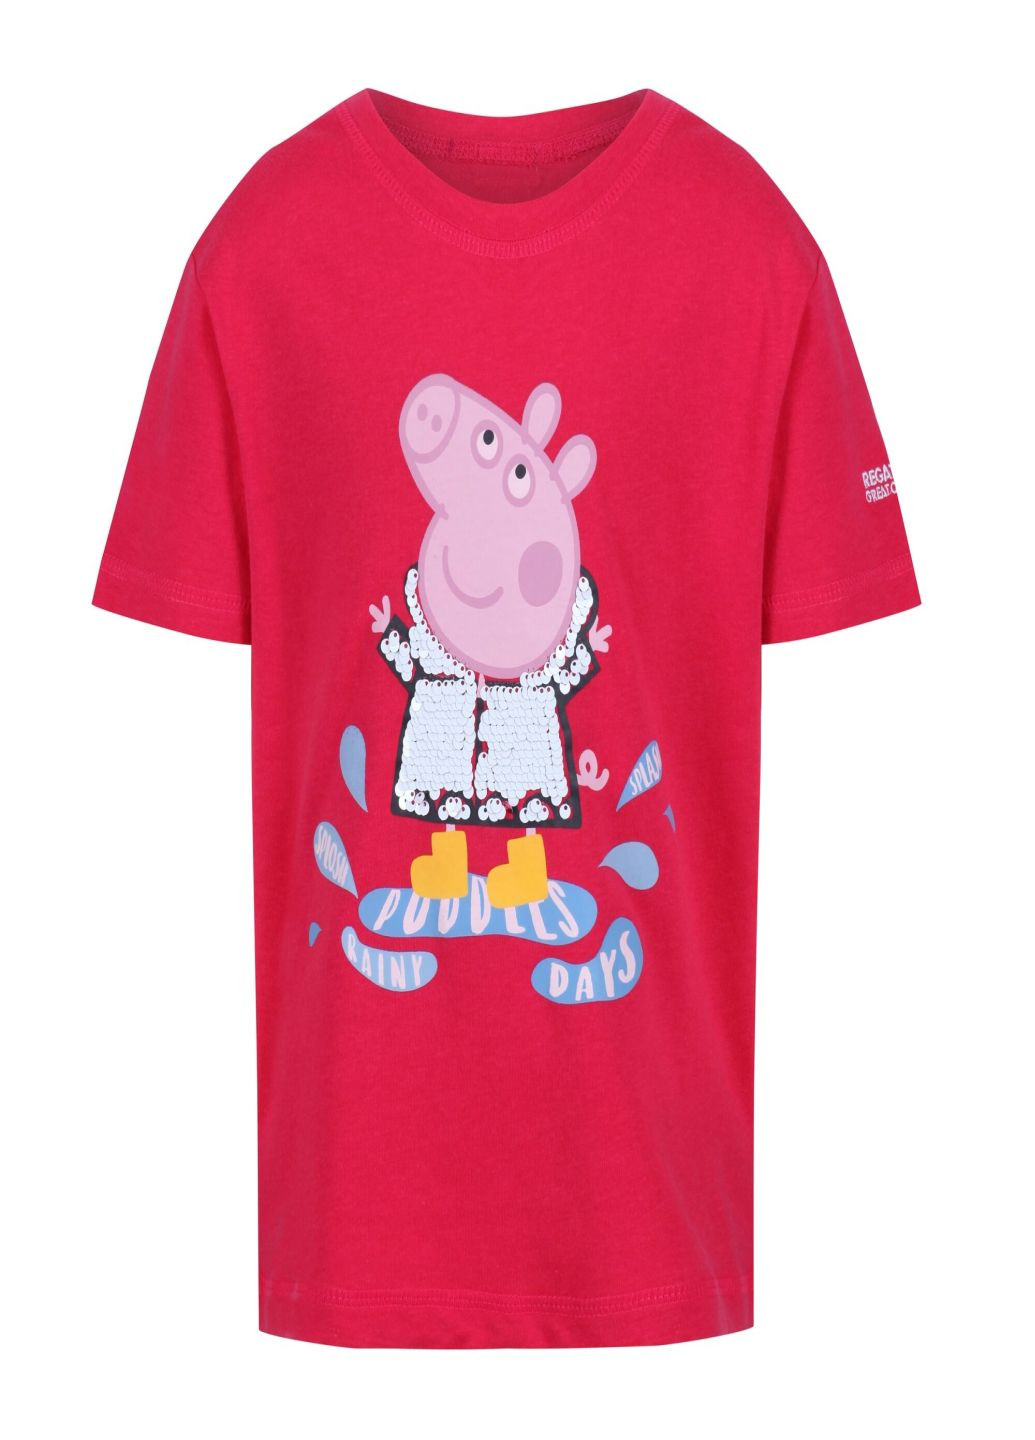 Розовая летняя футболка Regatta